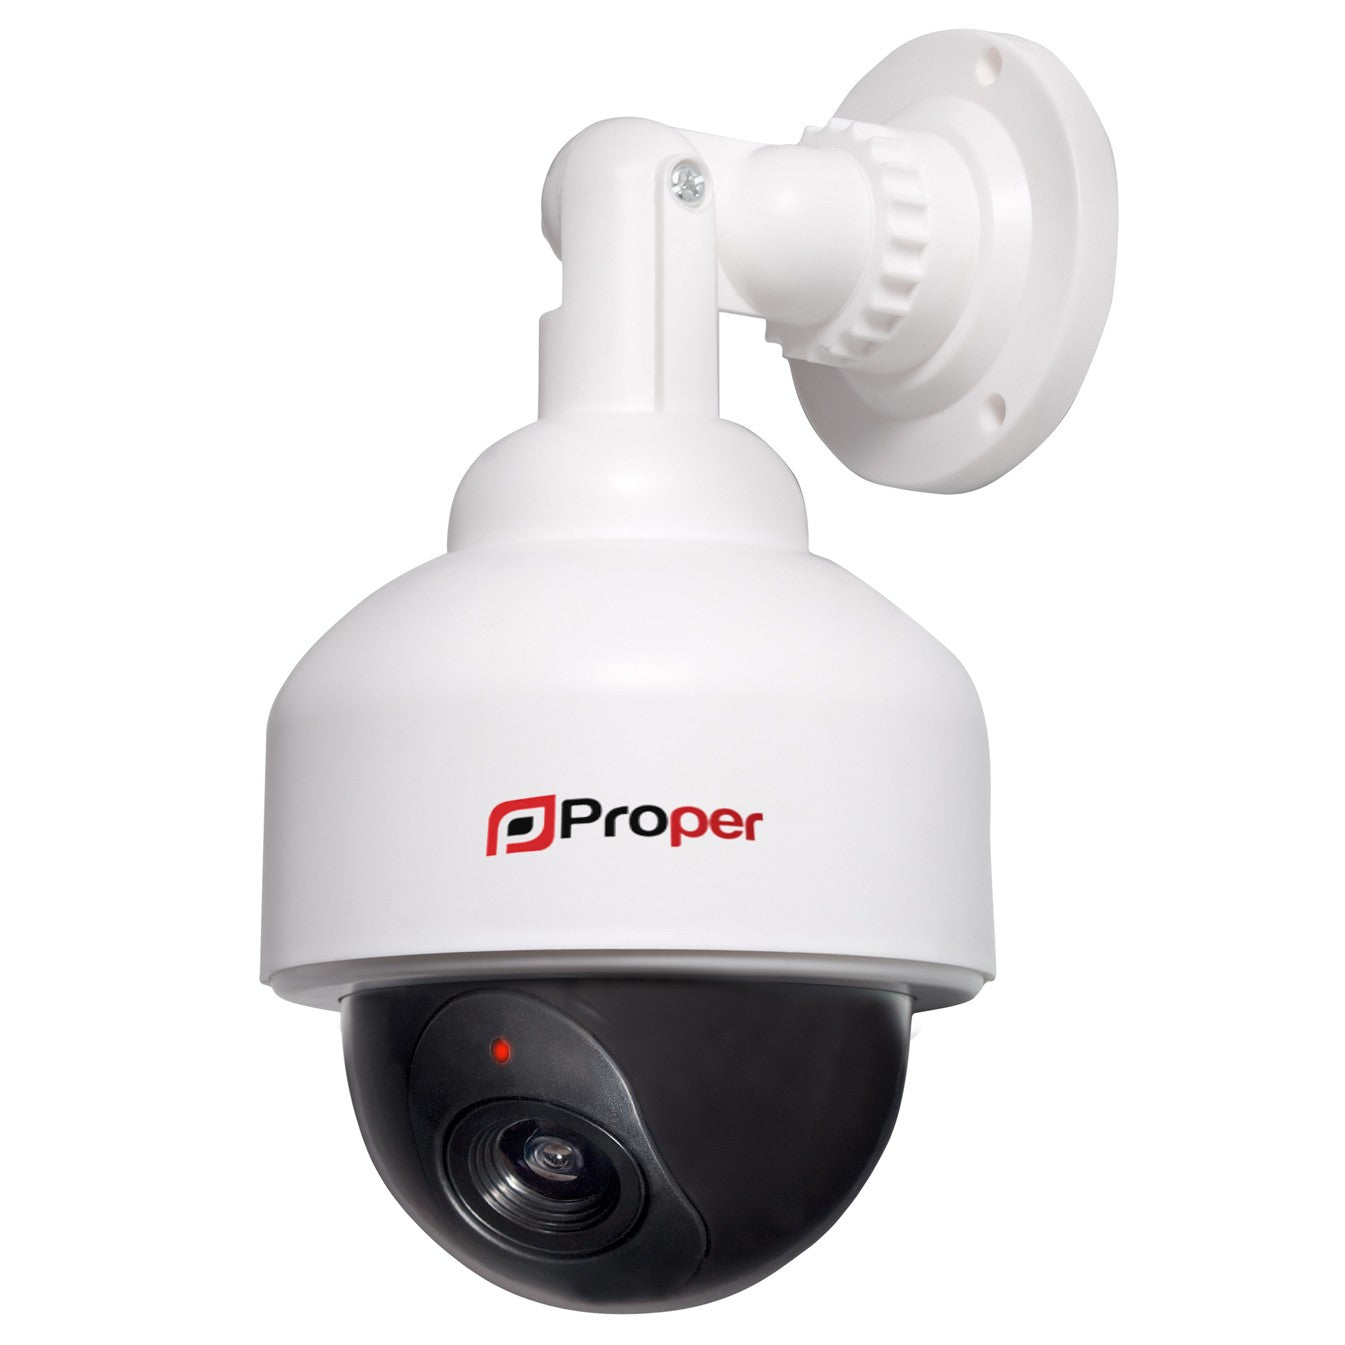 ProperAV Imitation High-Speed Dome Dummy Security Camera - White